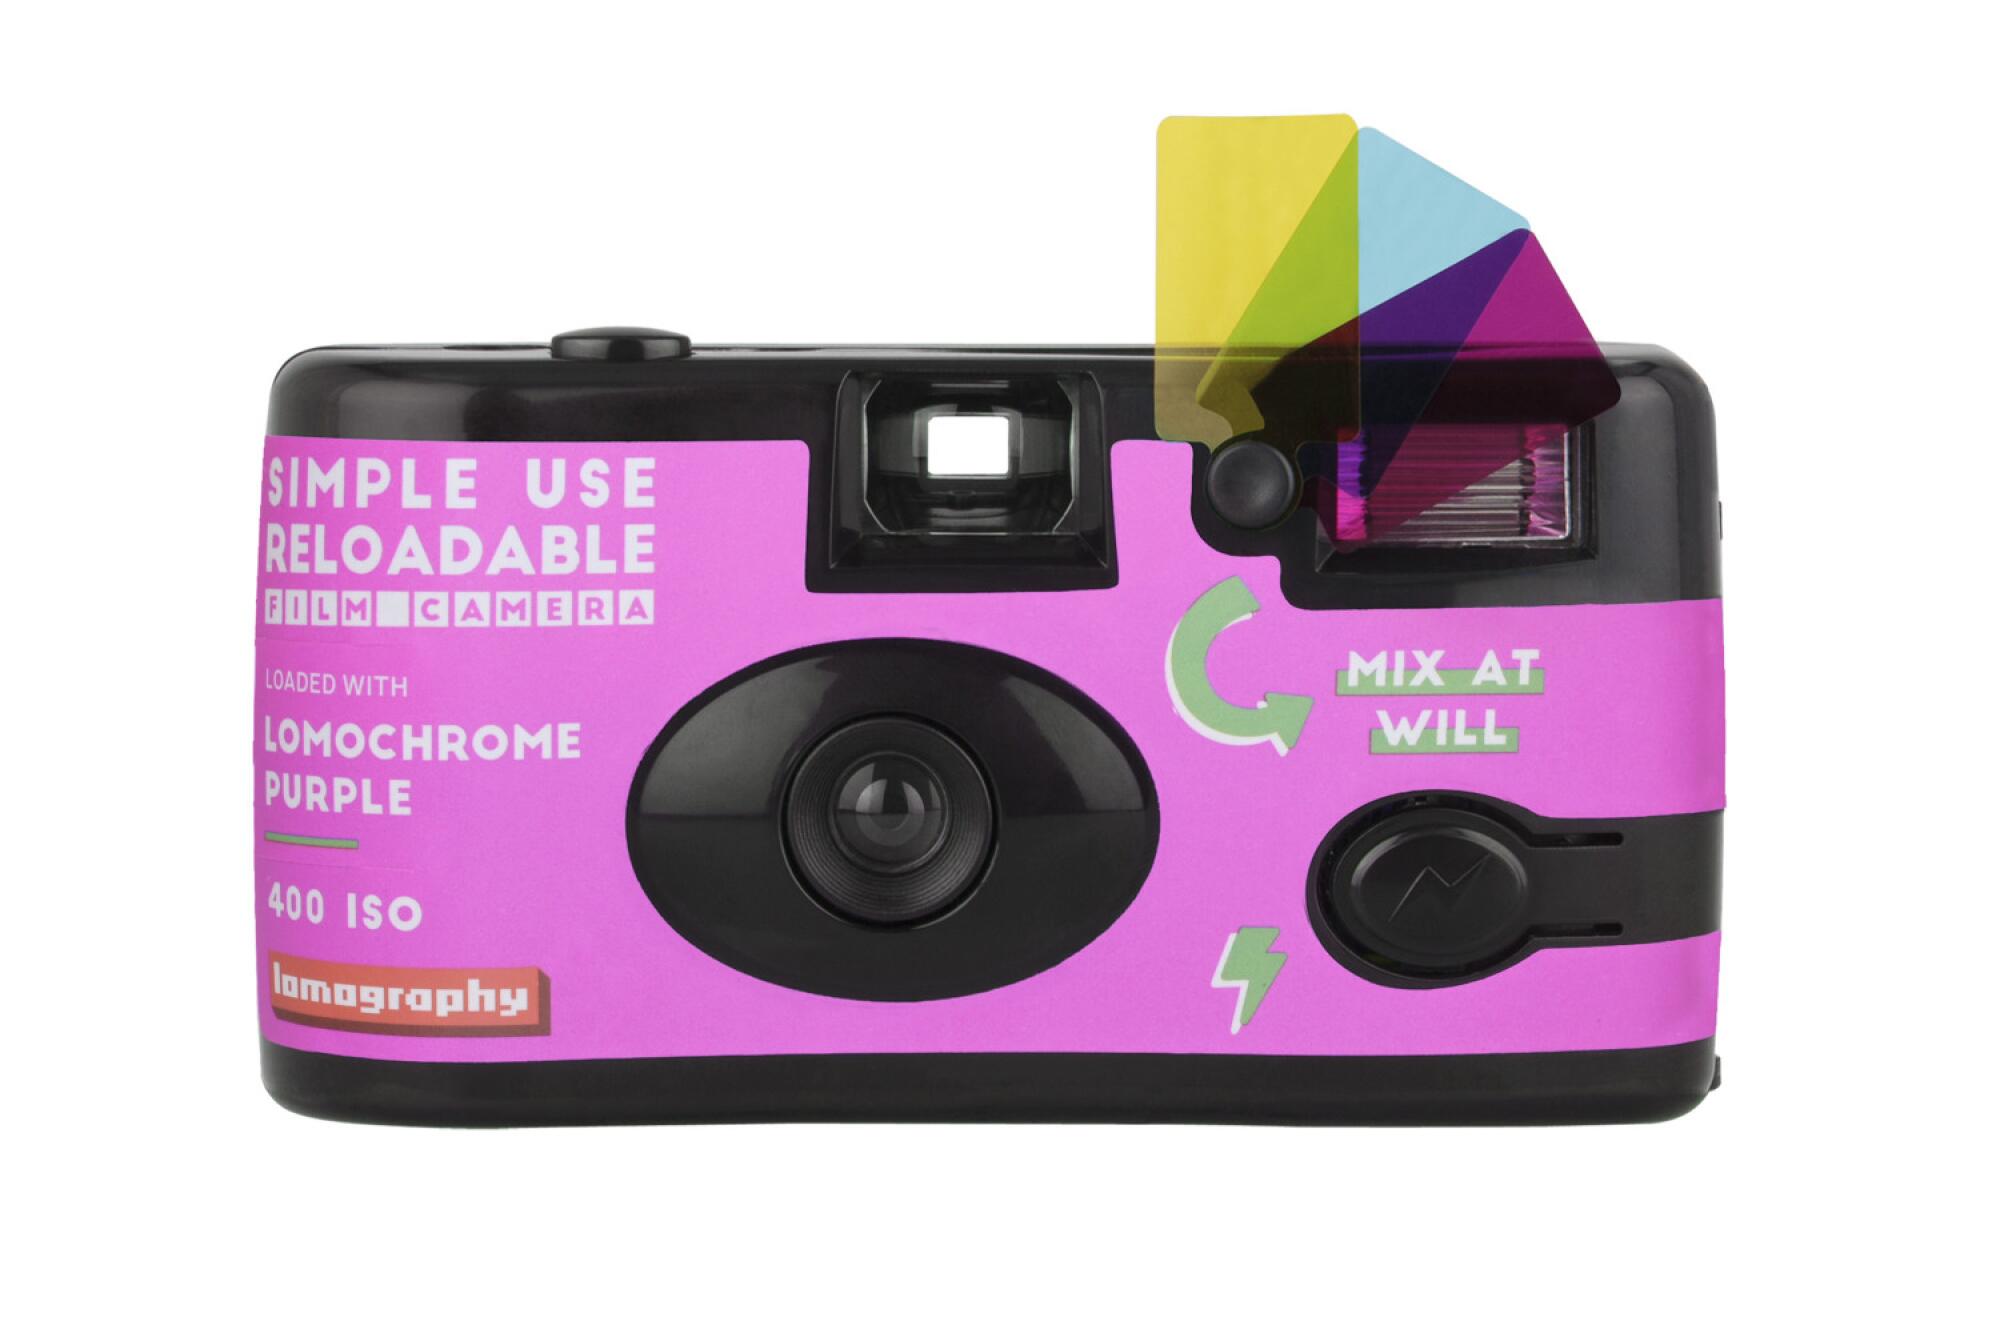 Lomochrome reloadable film camera.